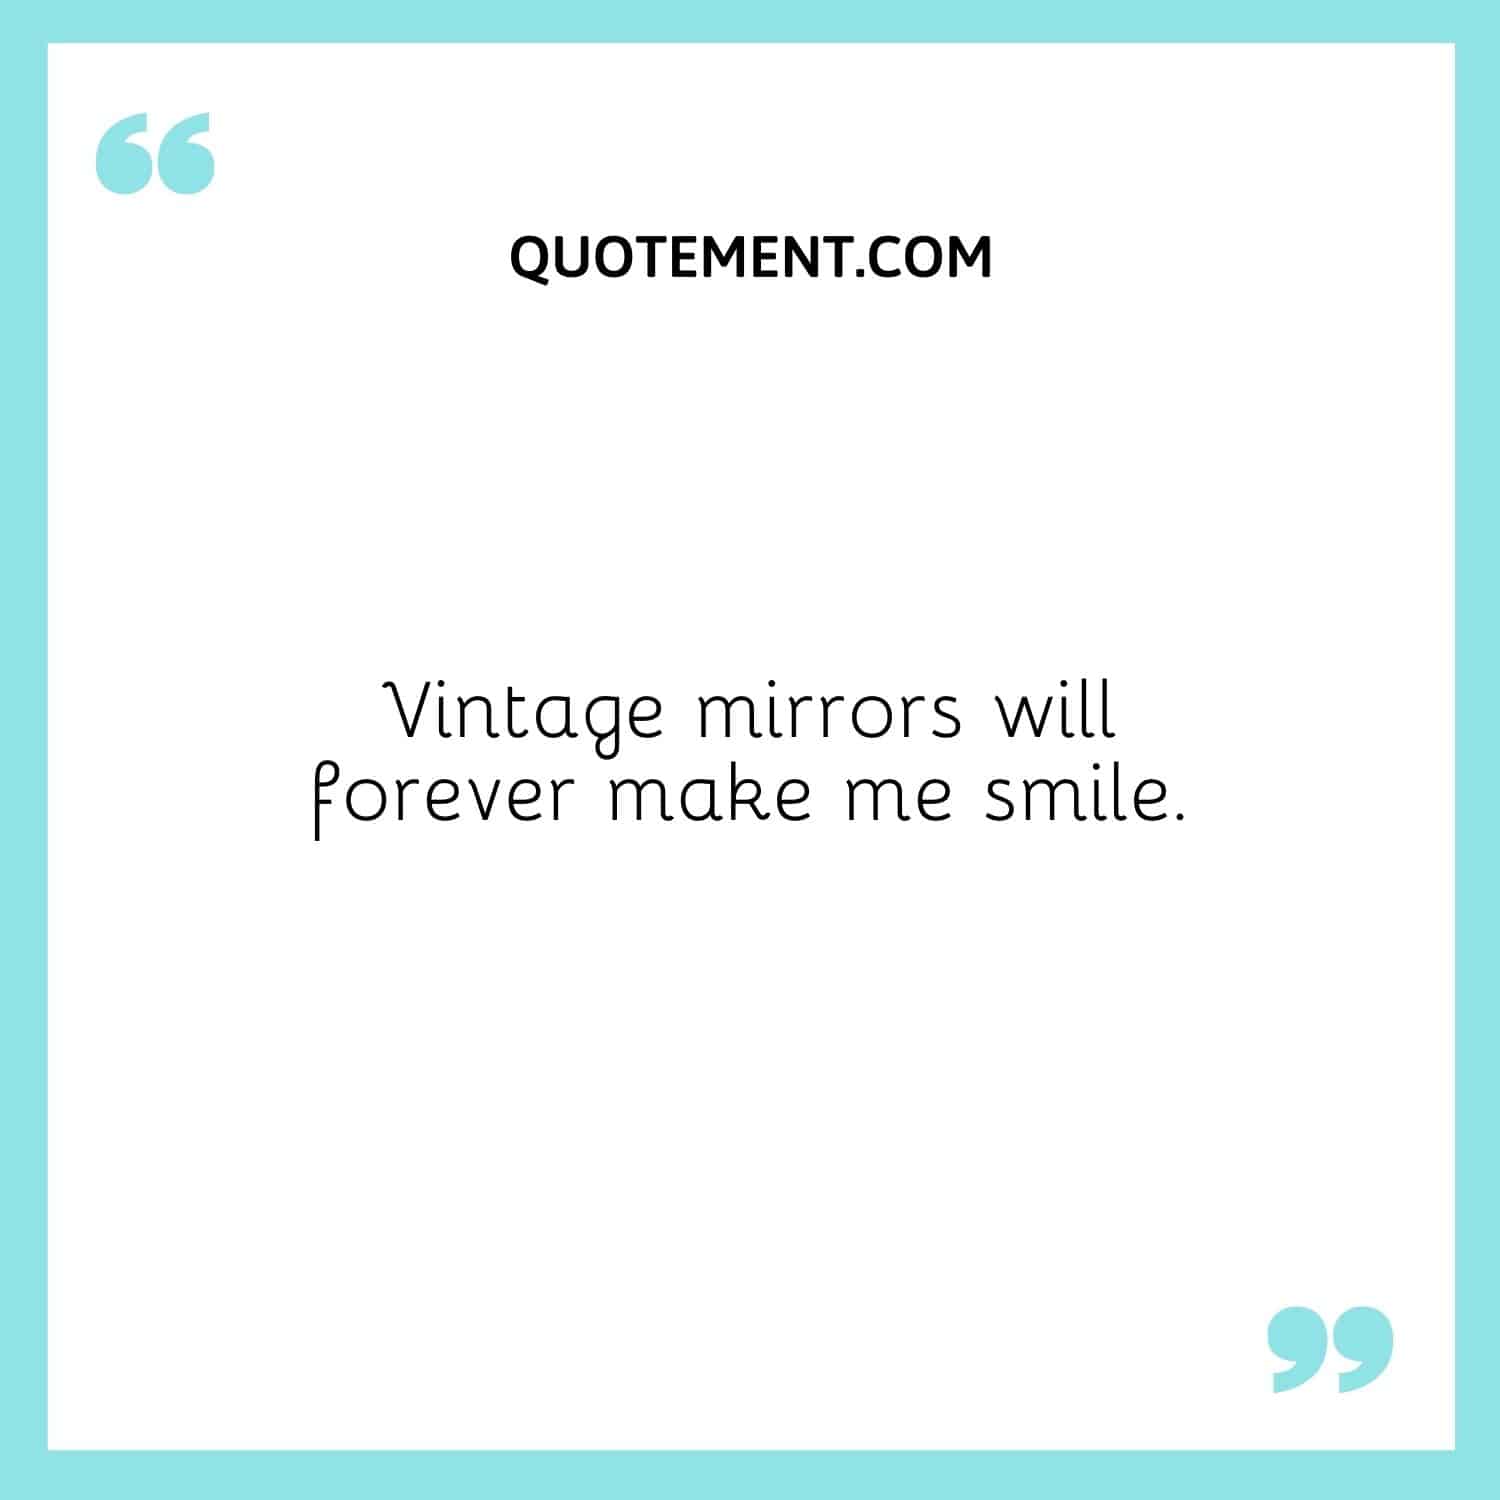 Vintage mirrors will forever make me smile.